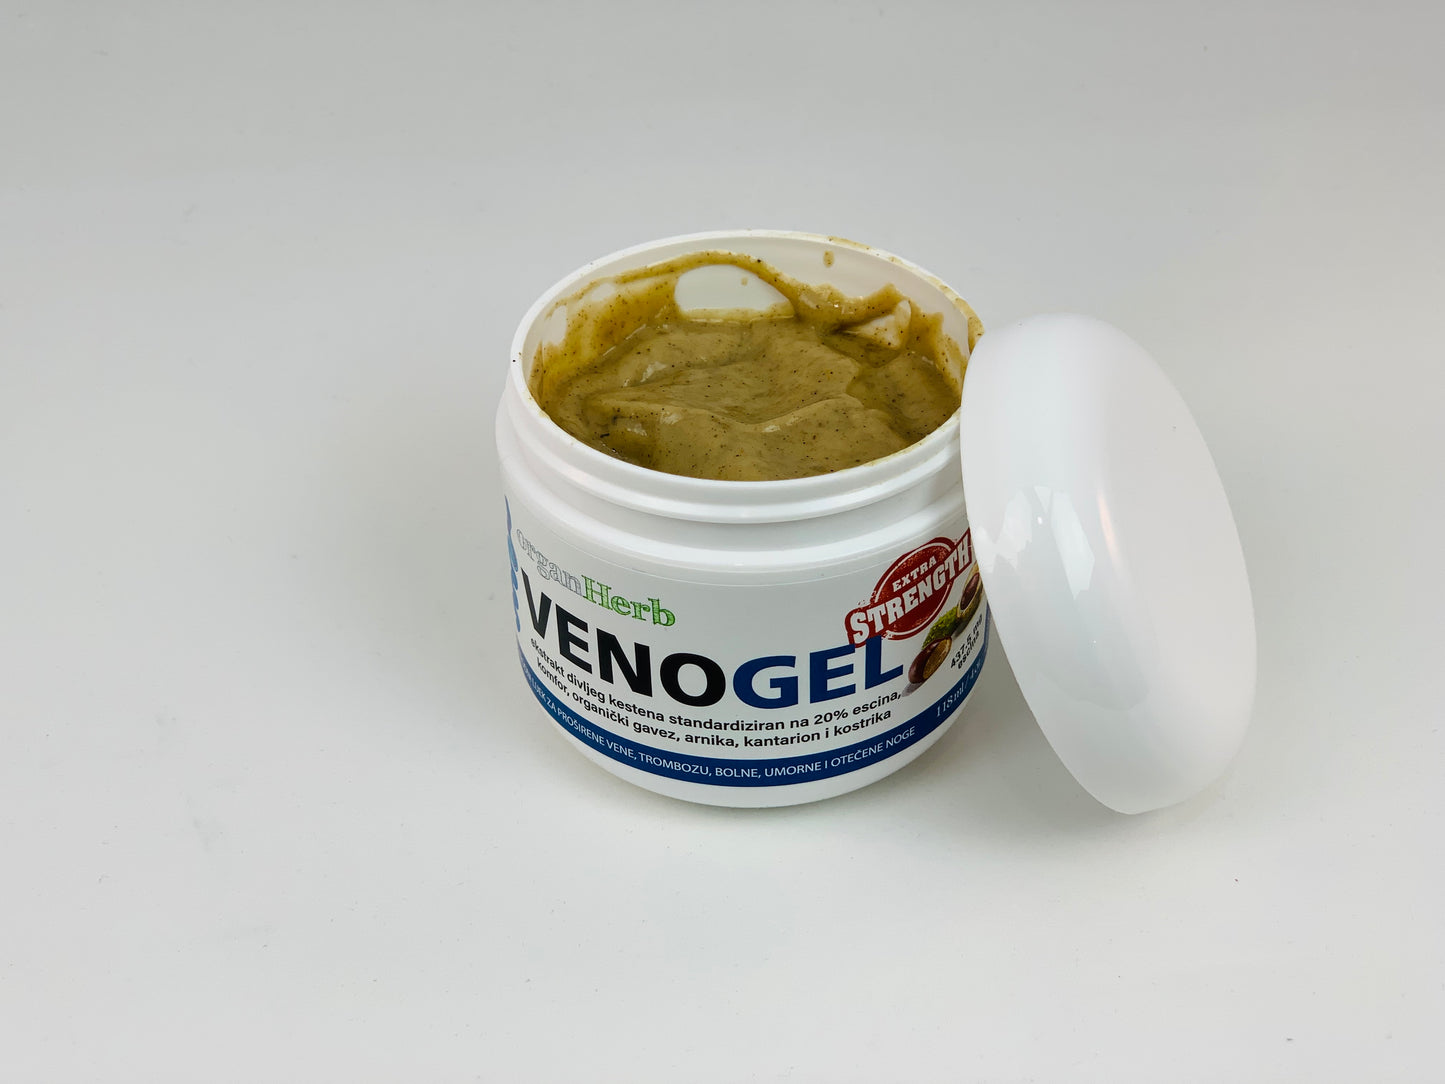 OrganHerb VenoGel Extra Strength (Horse Chestnut Gel) 4 oz - OrganHerb